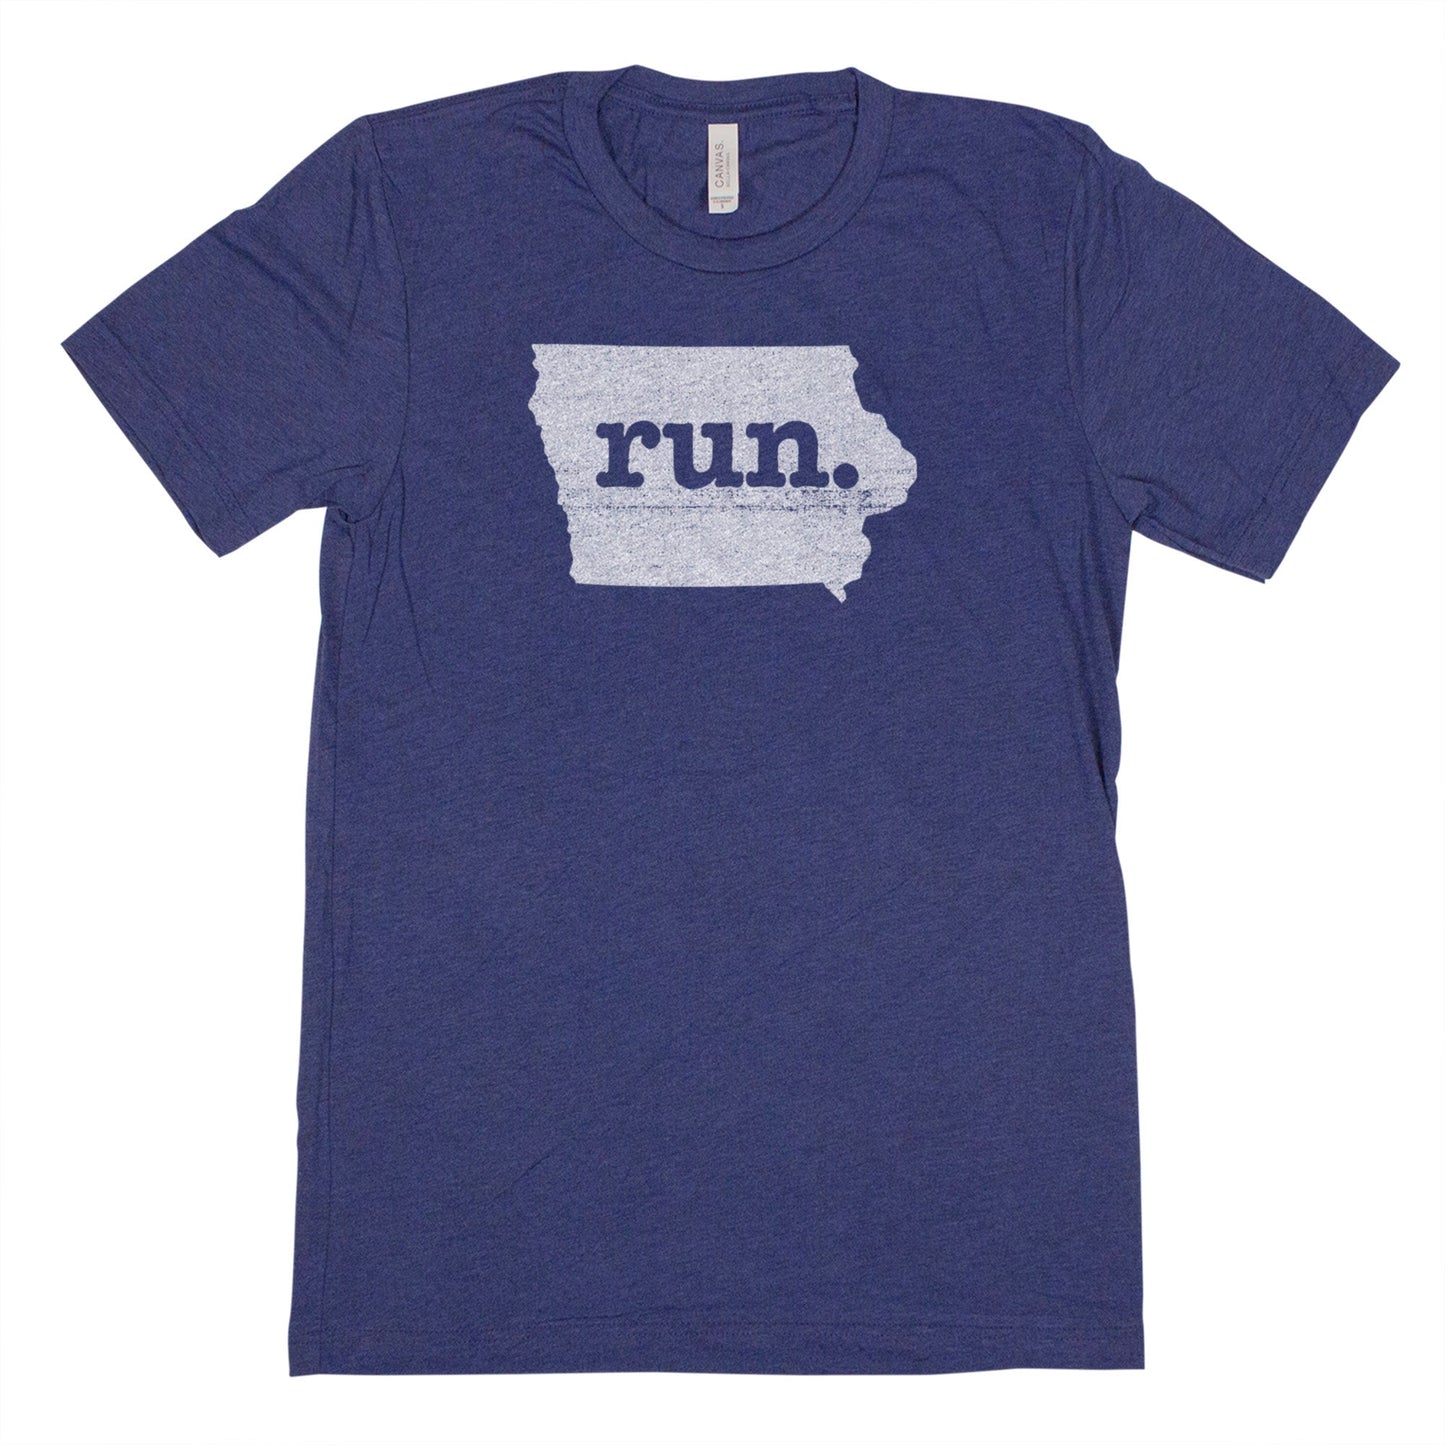 run. Men's Unisex T-Shirt - Iowa